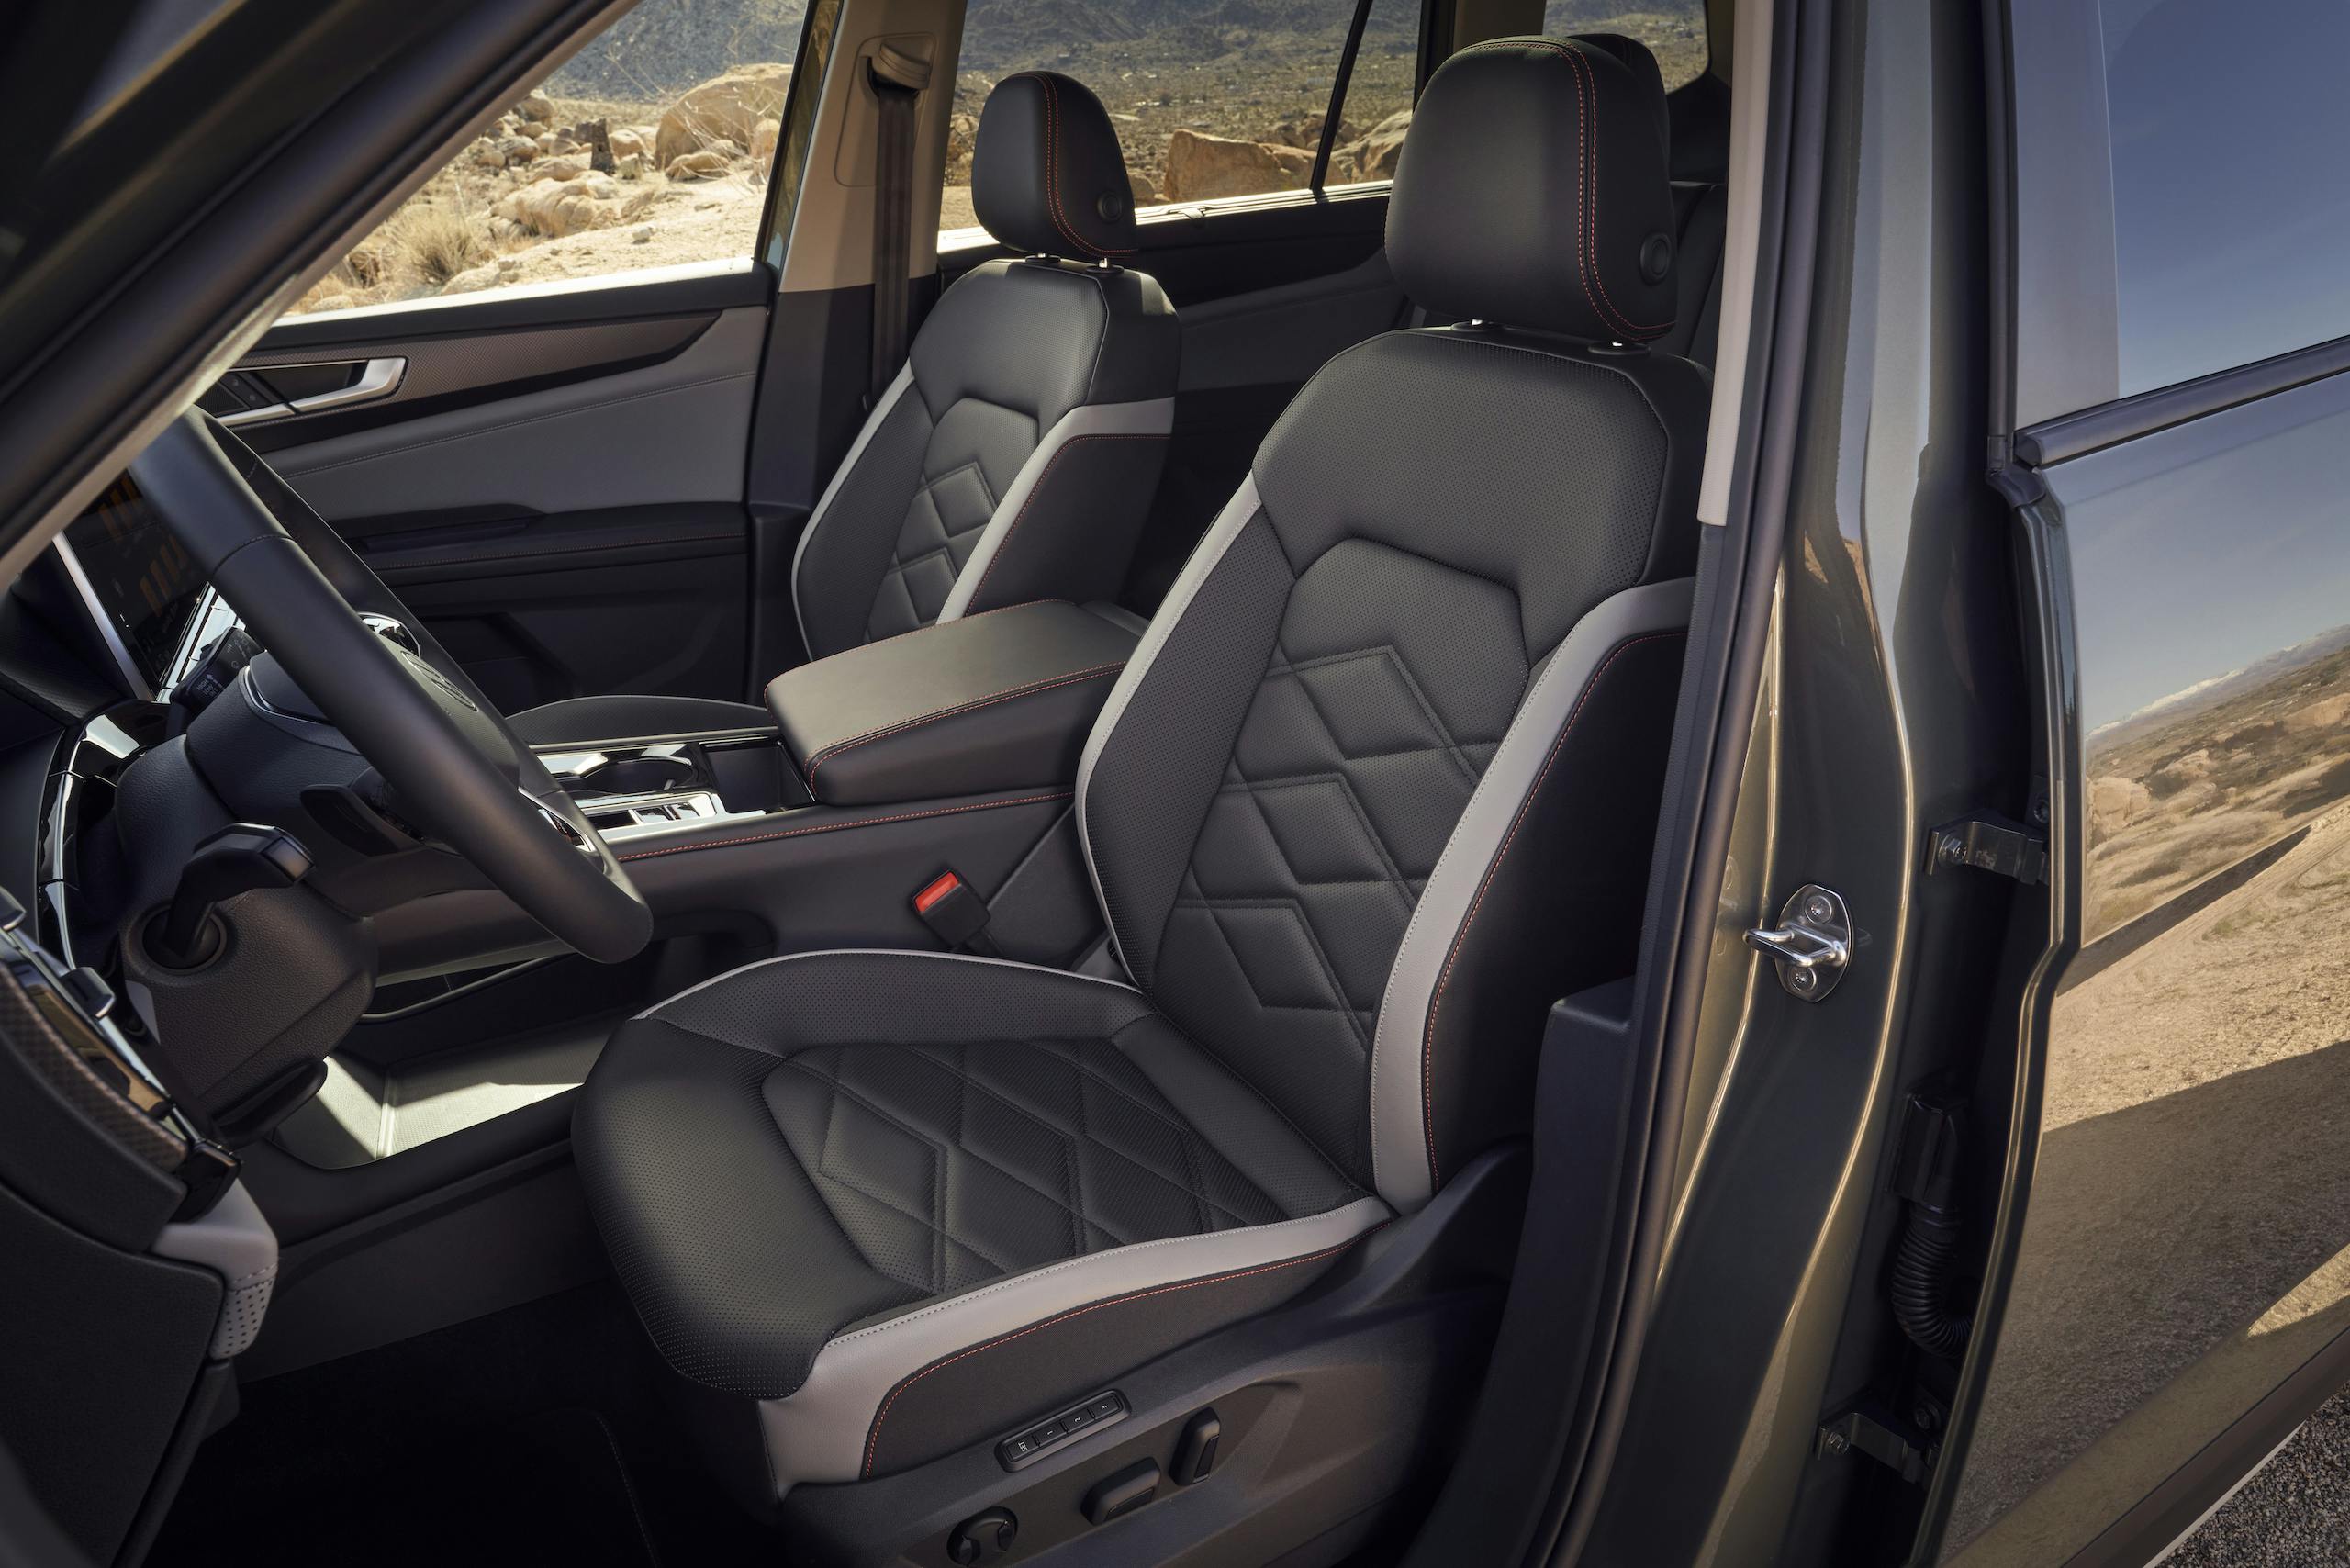 VW Atlas Peak Edition interior front seats